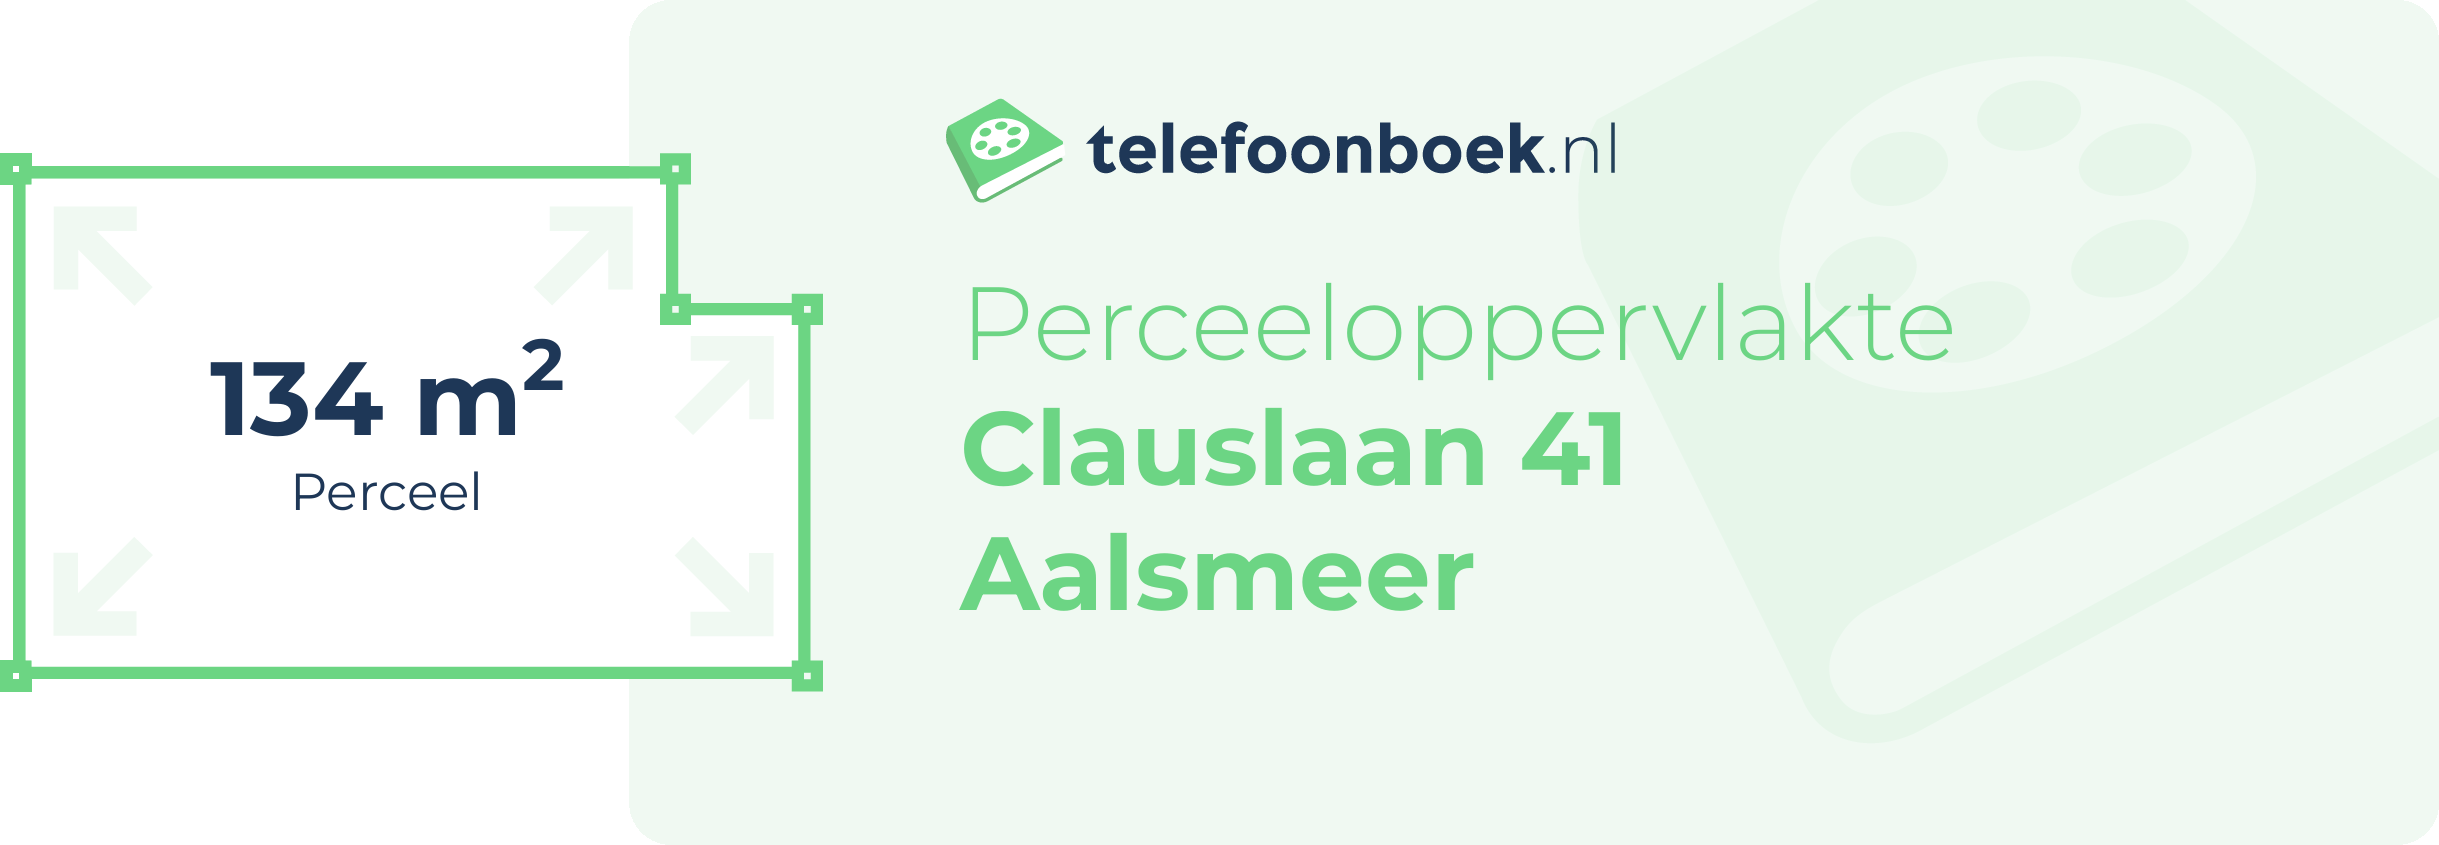 Perceeloppervlakte Clauslaan 41 Aalsmeer